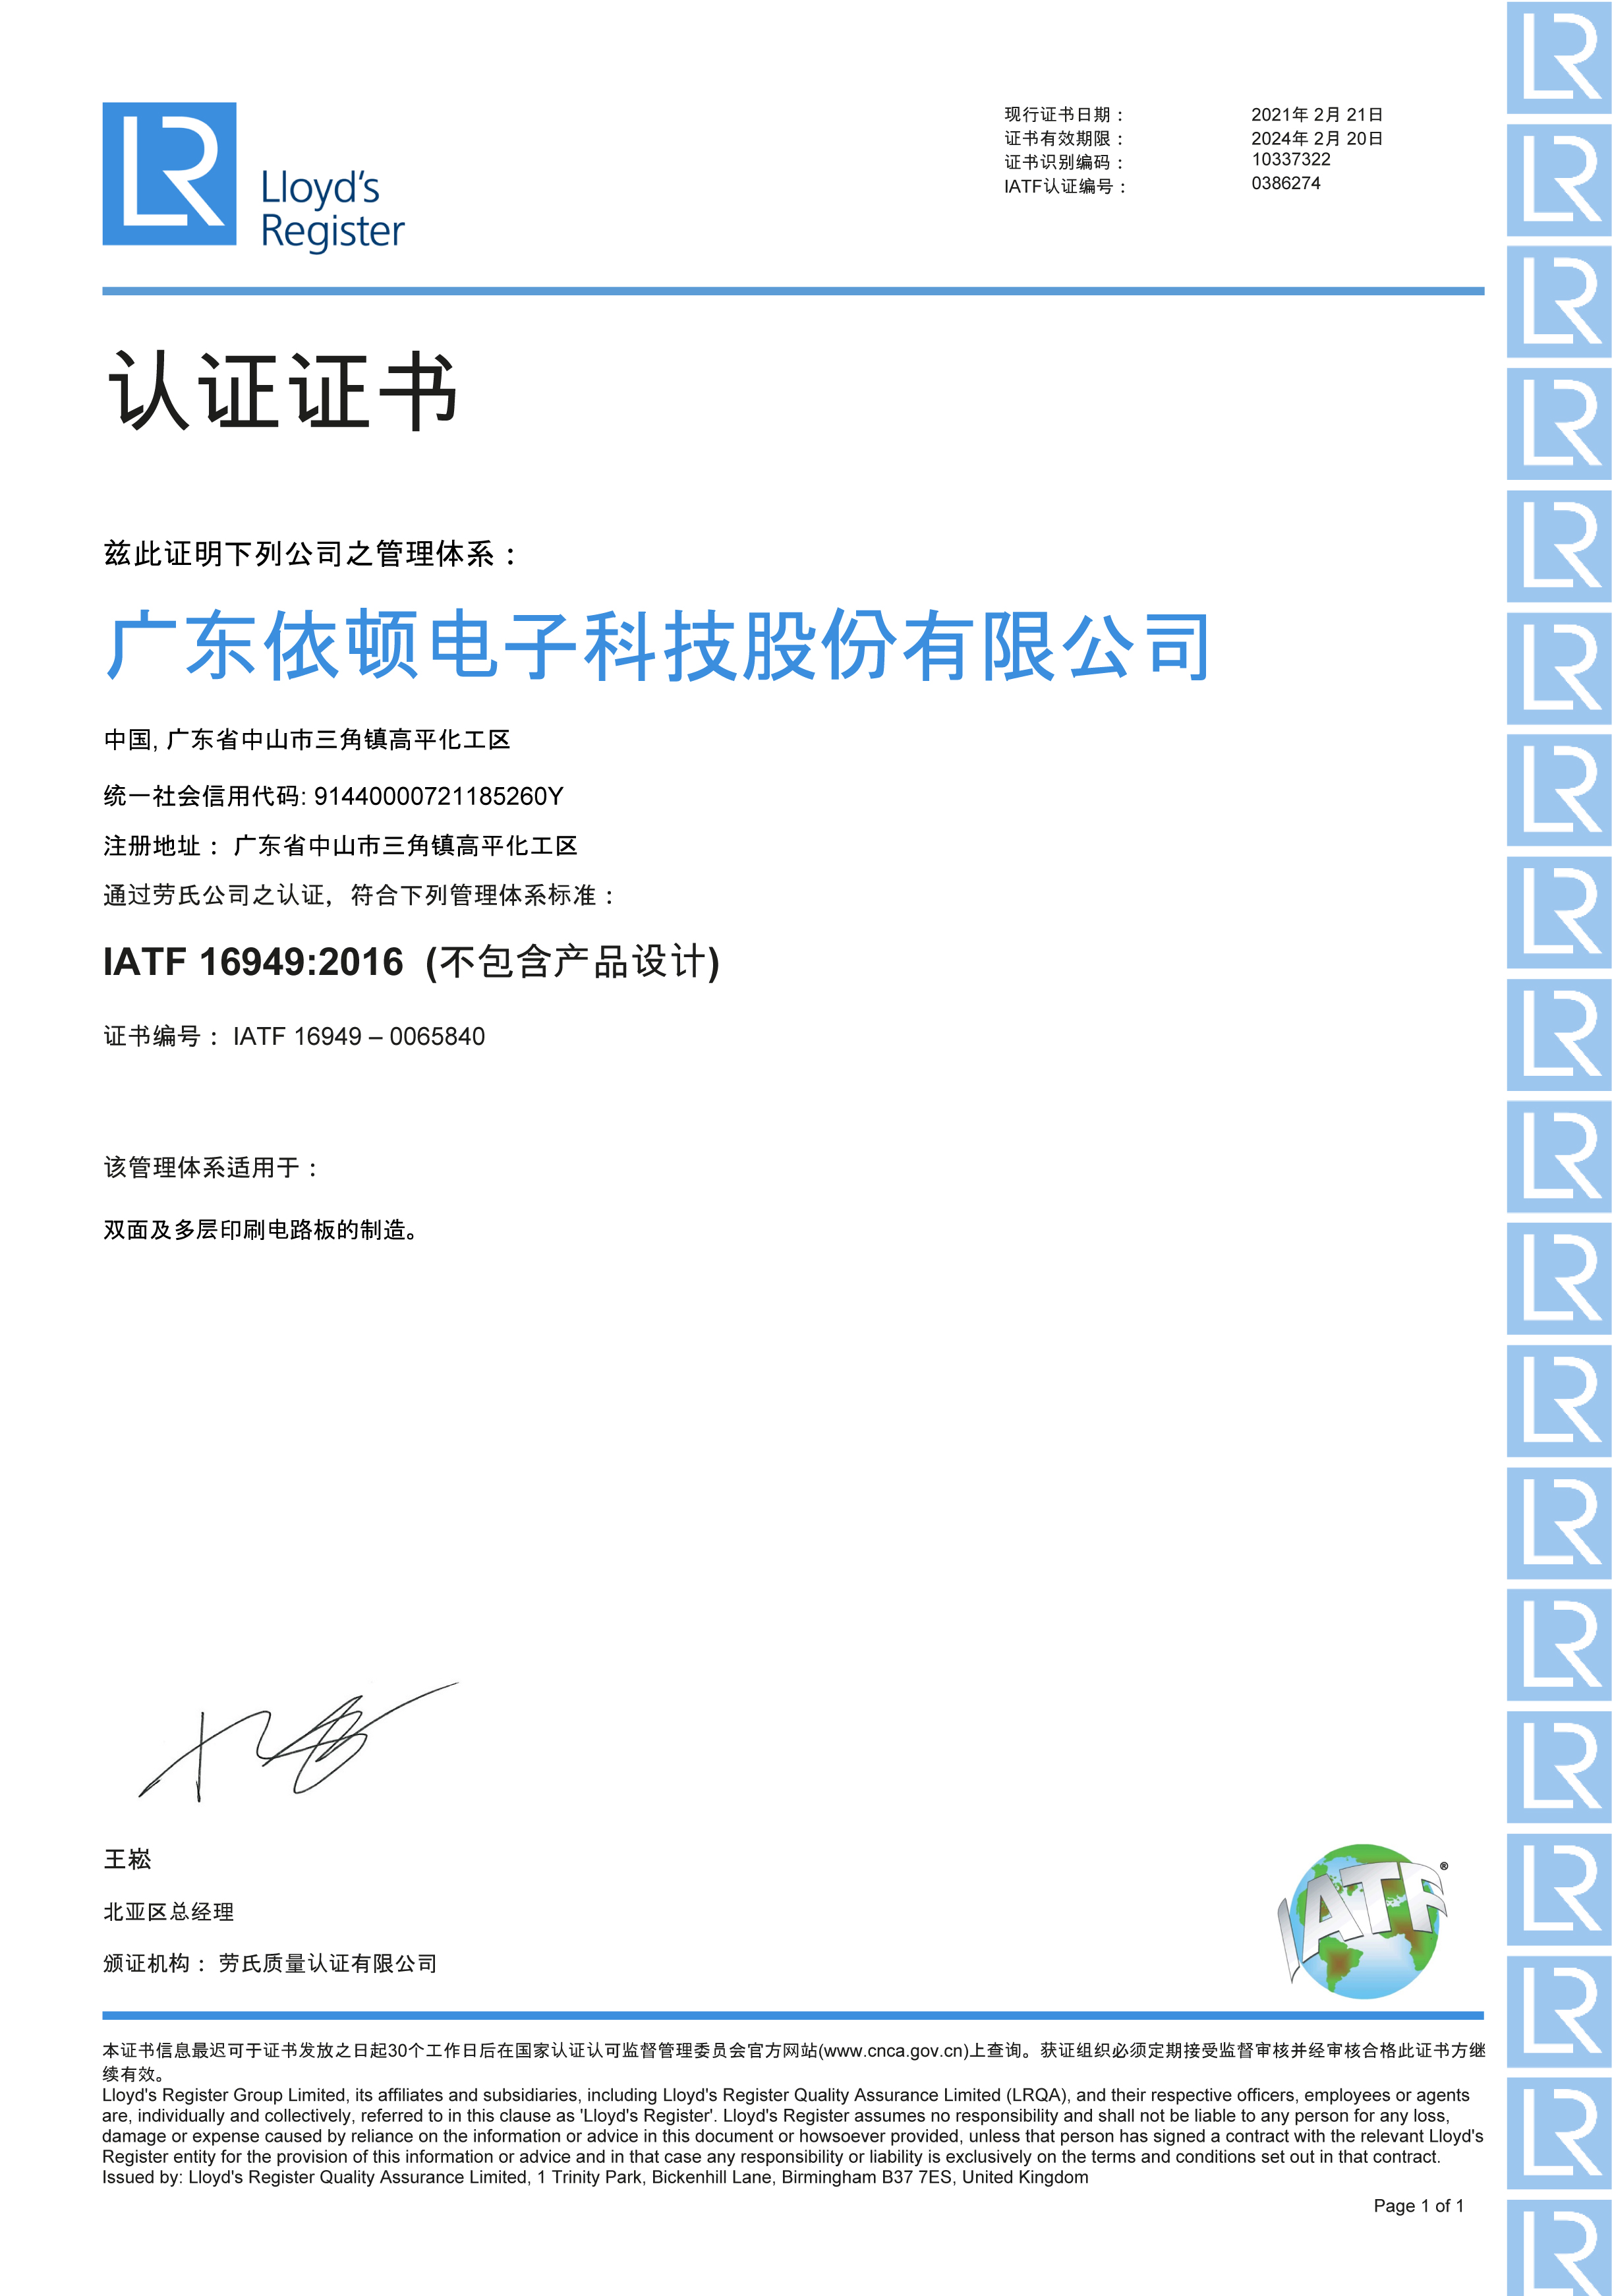 IATF-16949 Automotive Quality Management System Certification